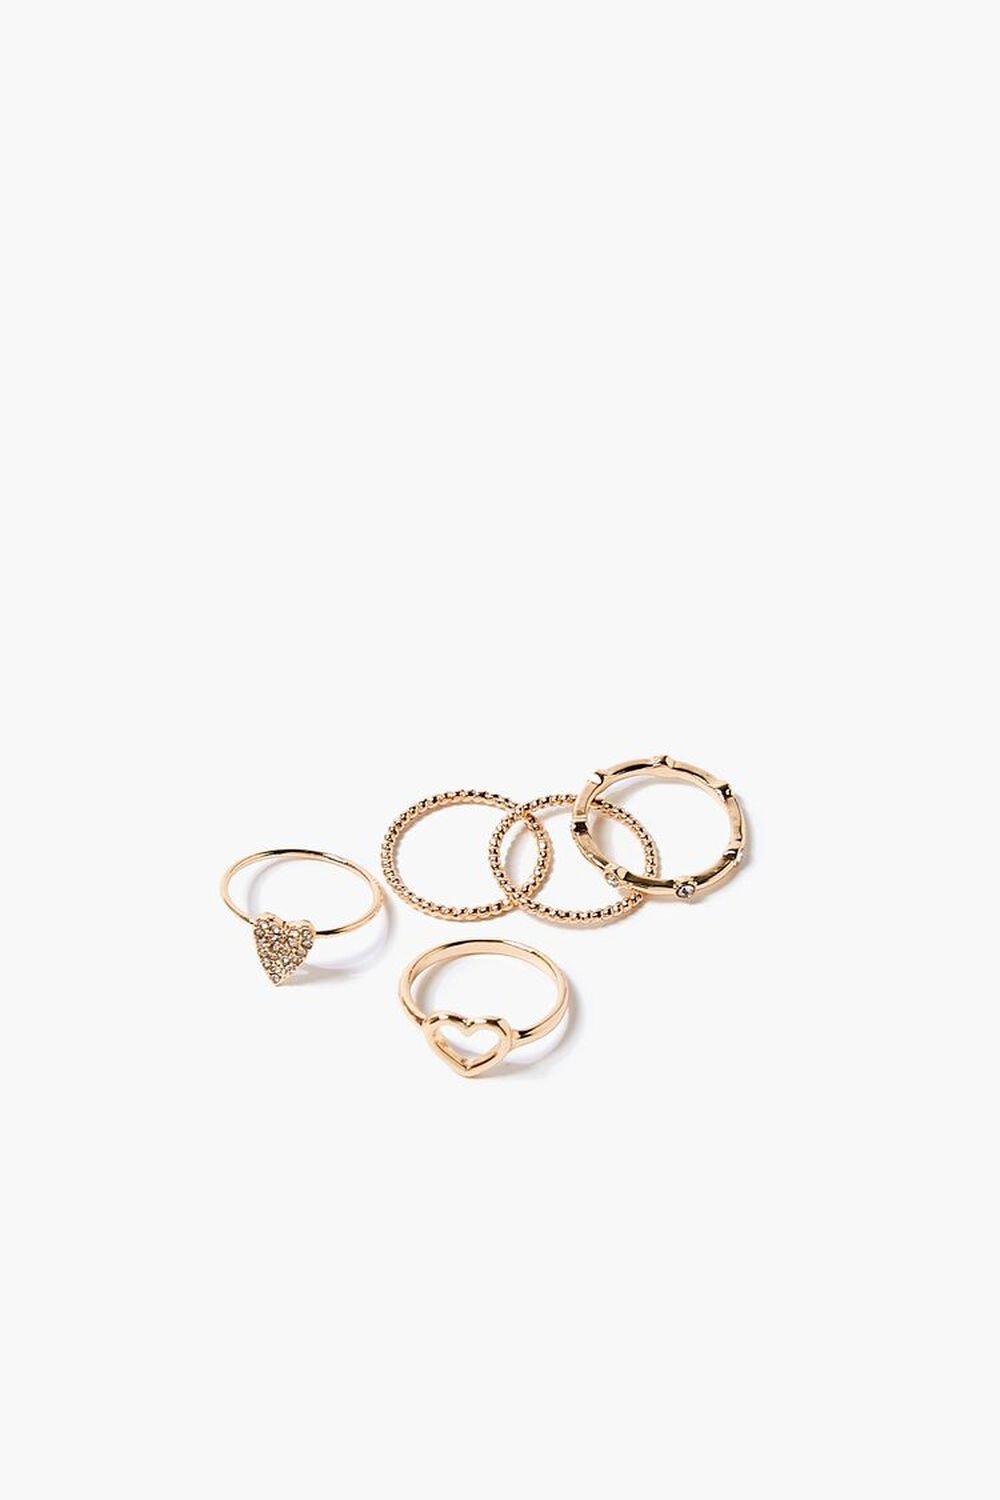 GOLD Heart Charm Ring Set, image 1